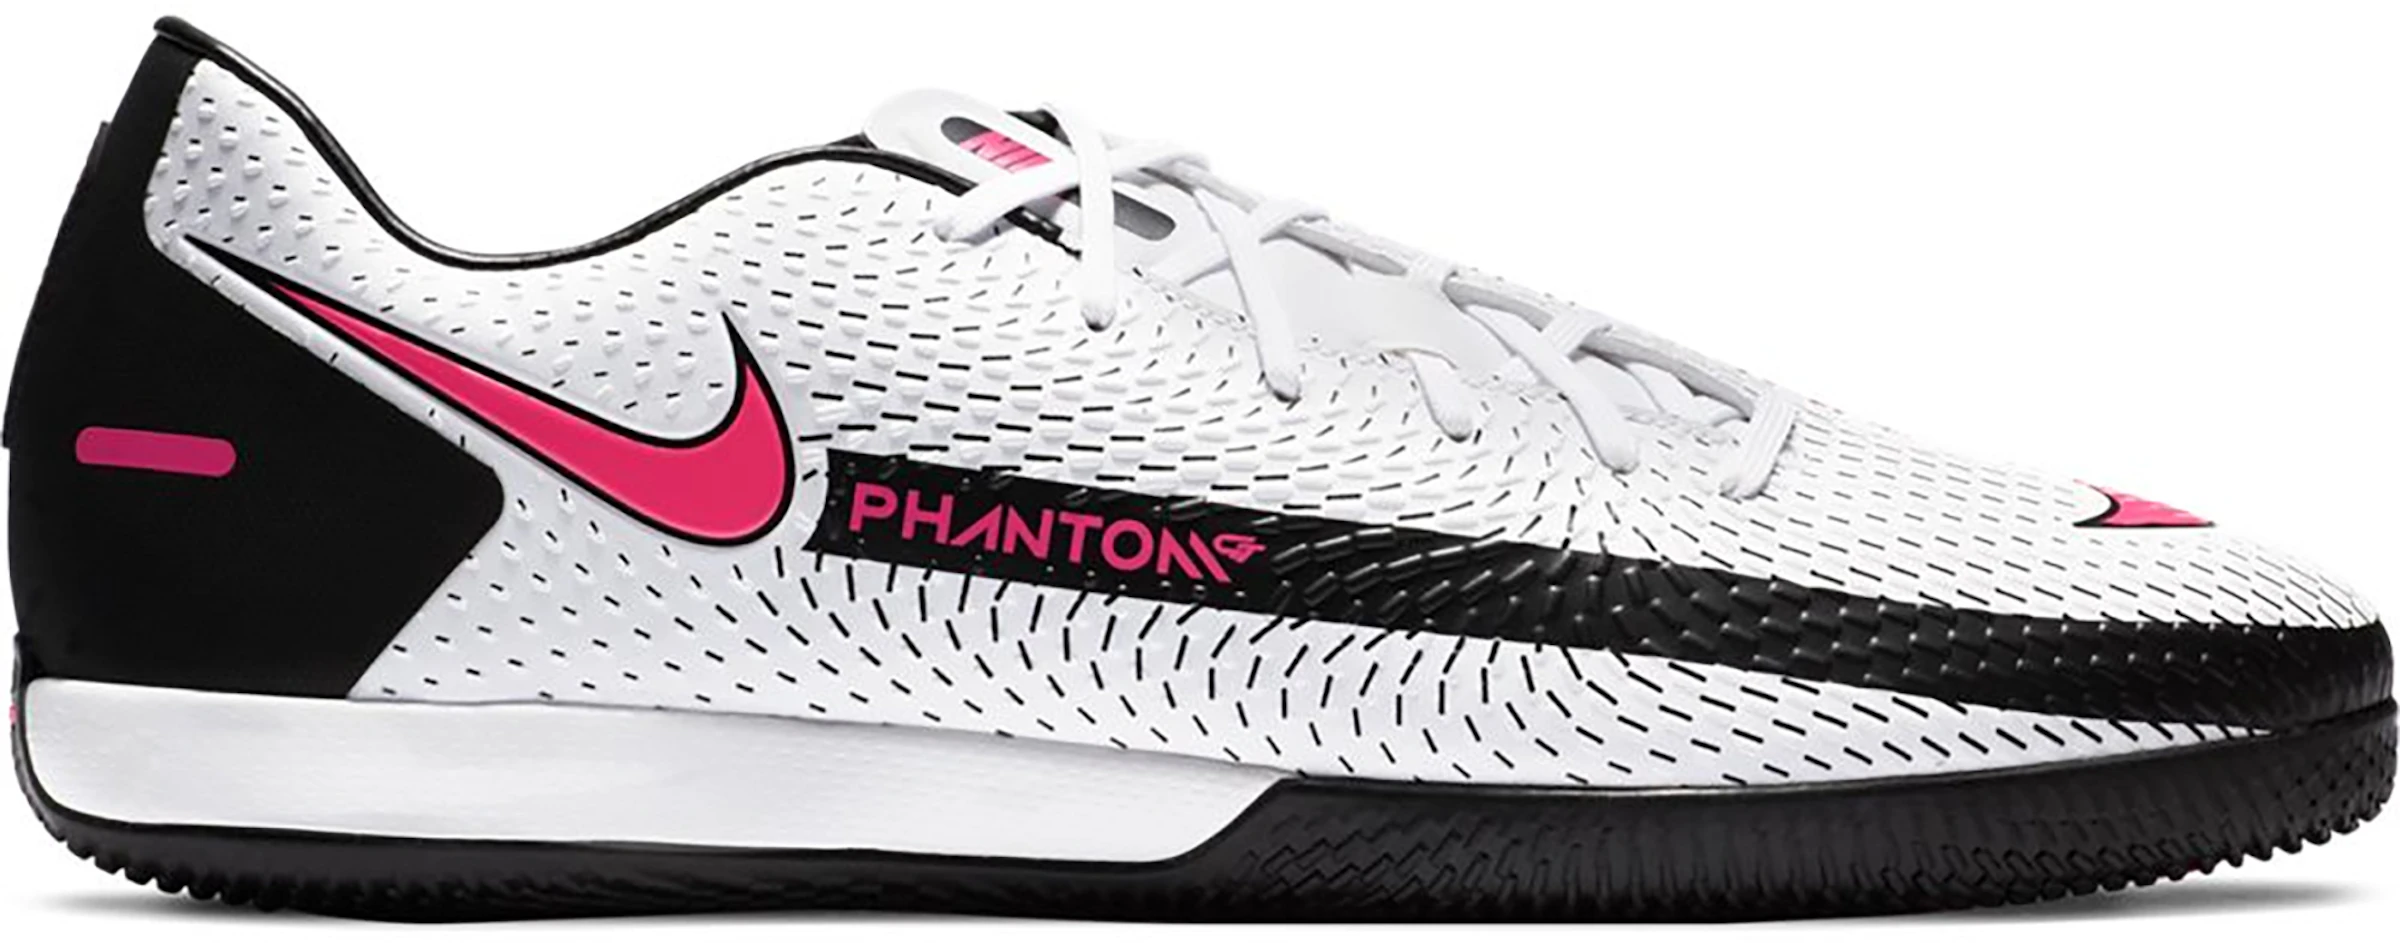 Redondear a la baja Reino marxista Nike Phantom GT Academy IC White Black Pink Blast - CK8467-160 - US